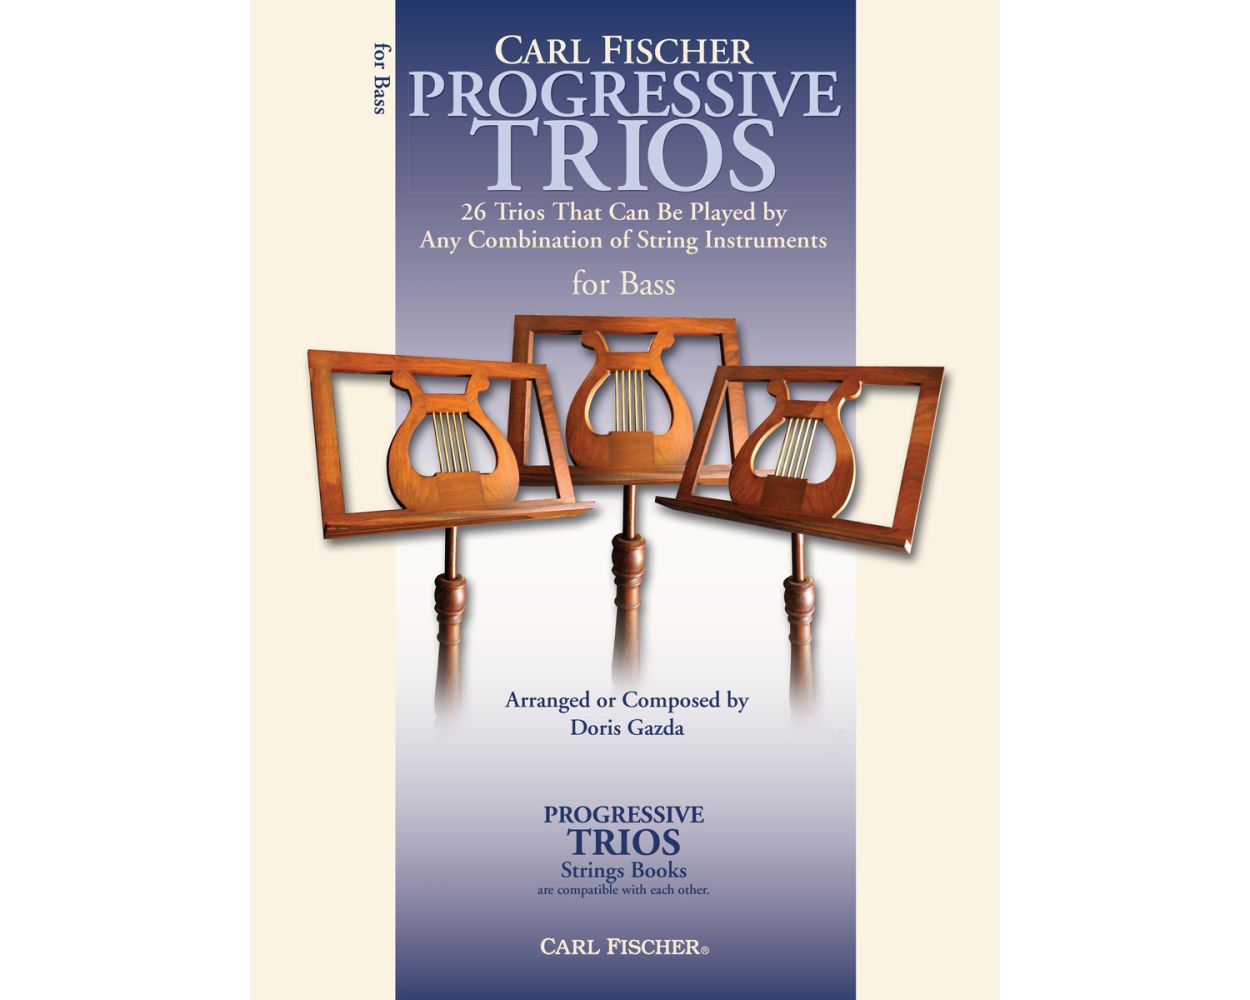 CFE40-Progressive Trios for Strings